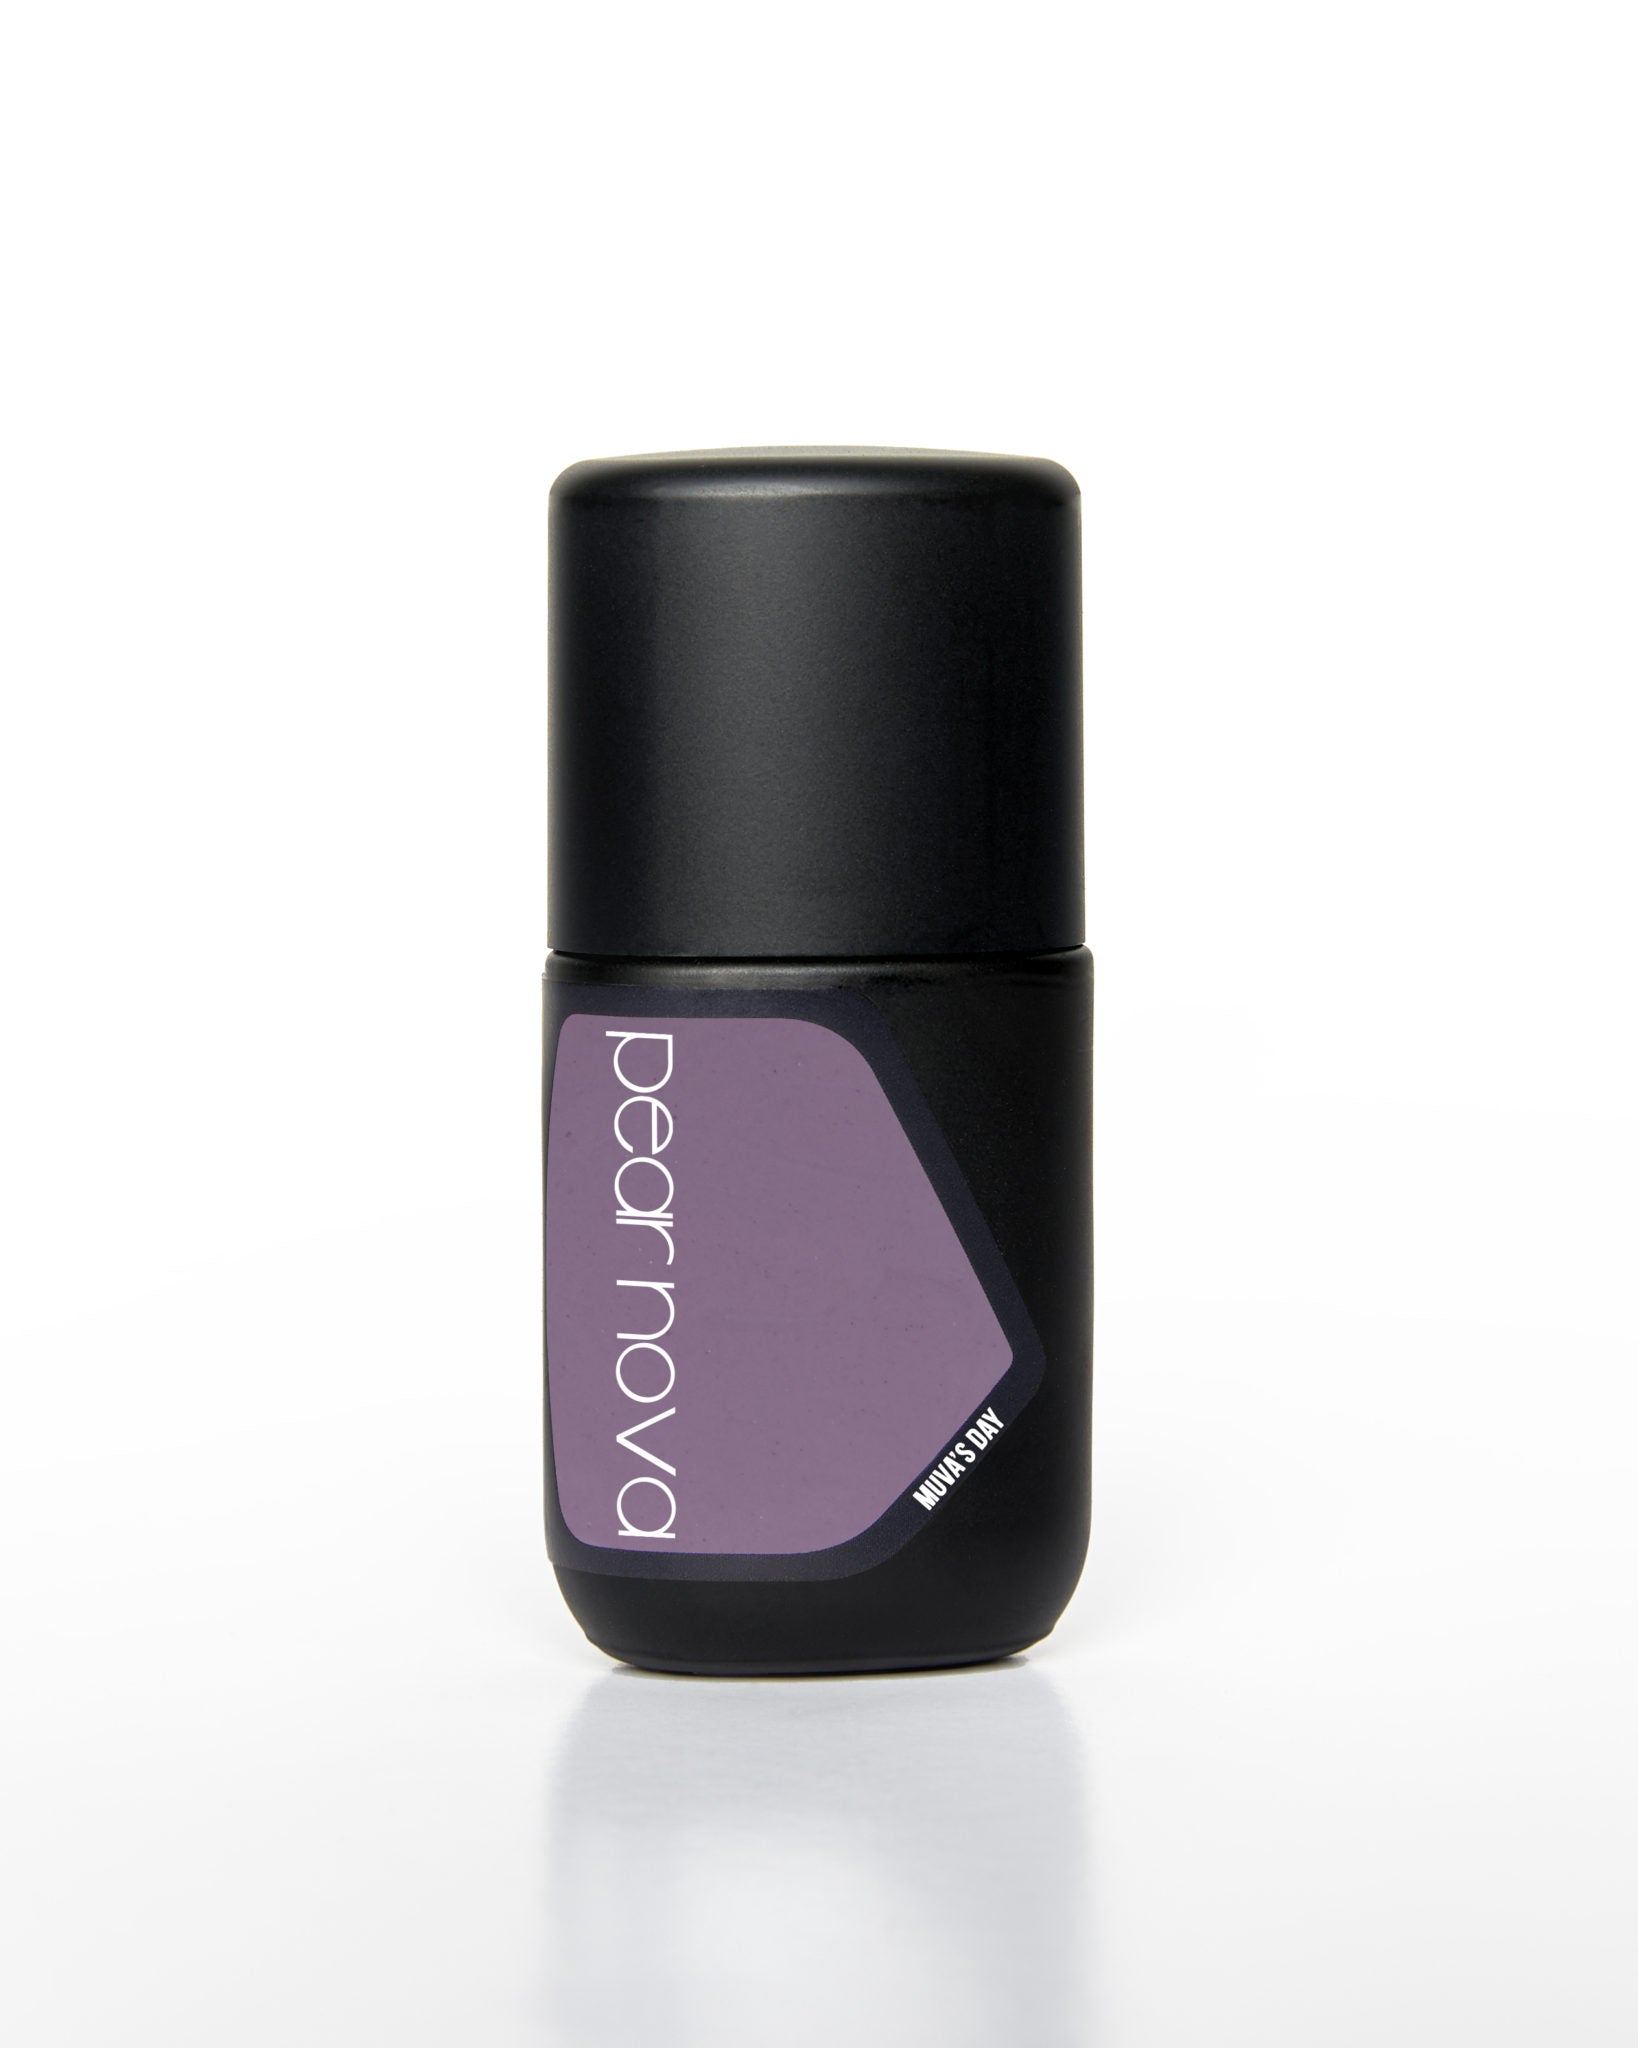 bottle of Muva's Day gel nail polish